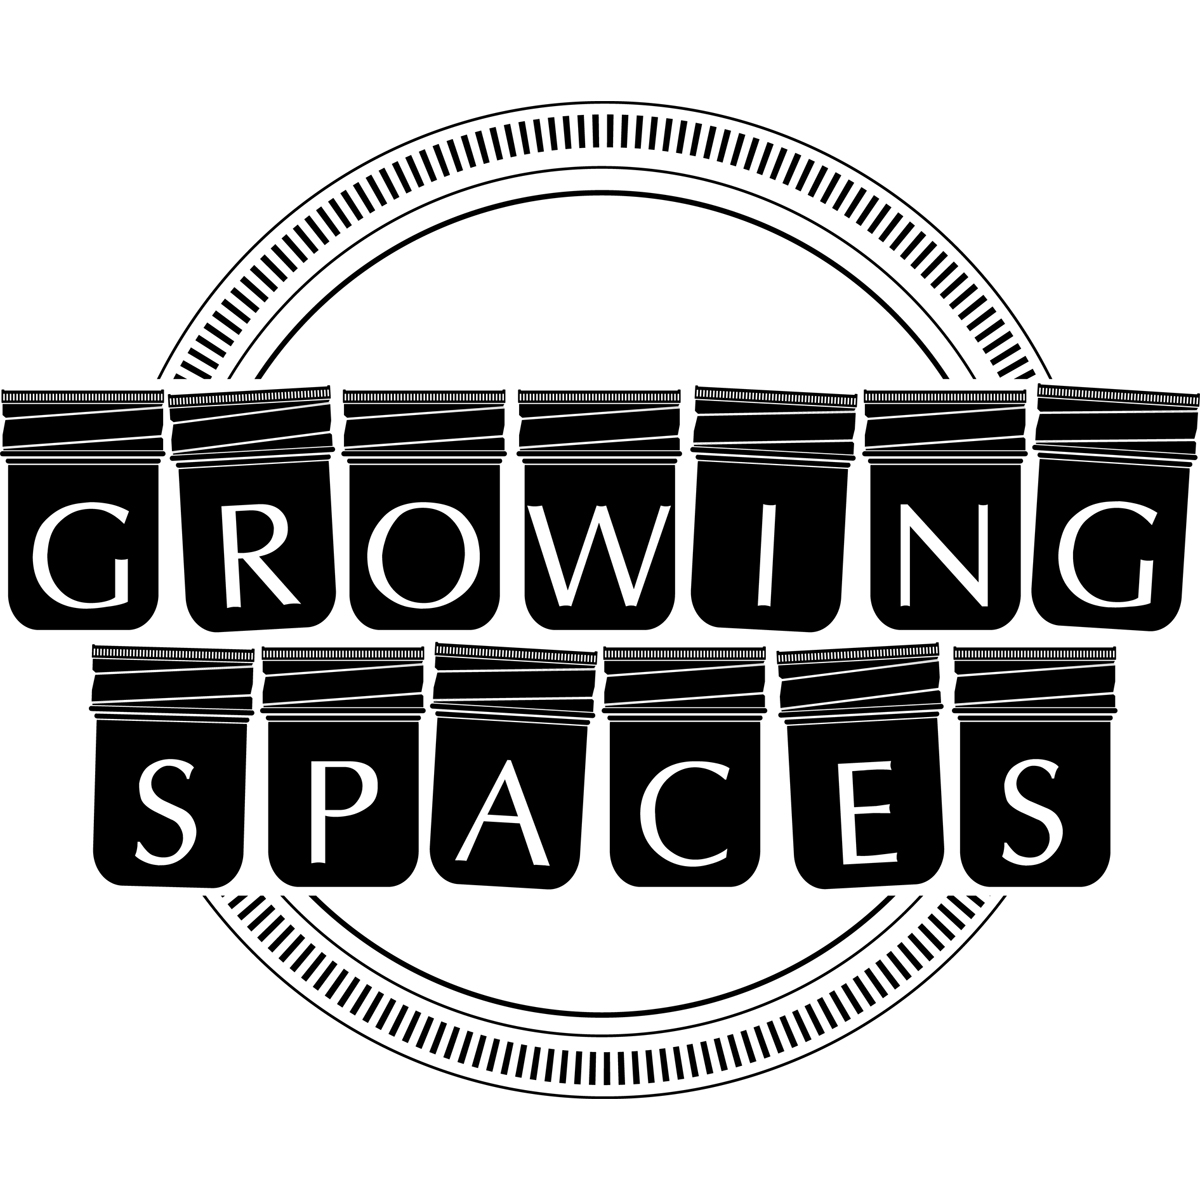 Growin' Spaces!